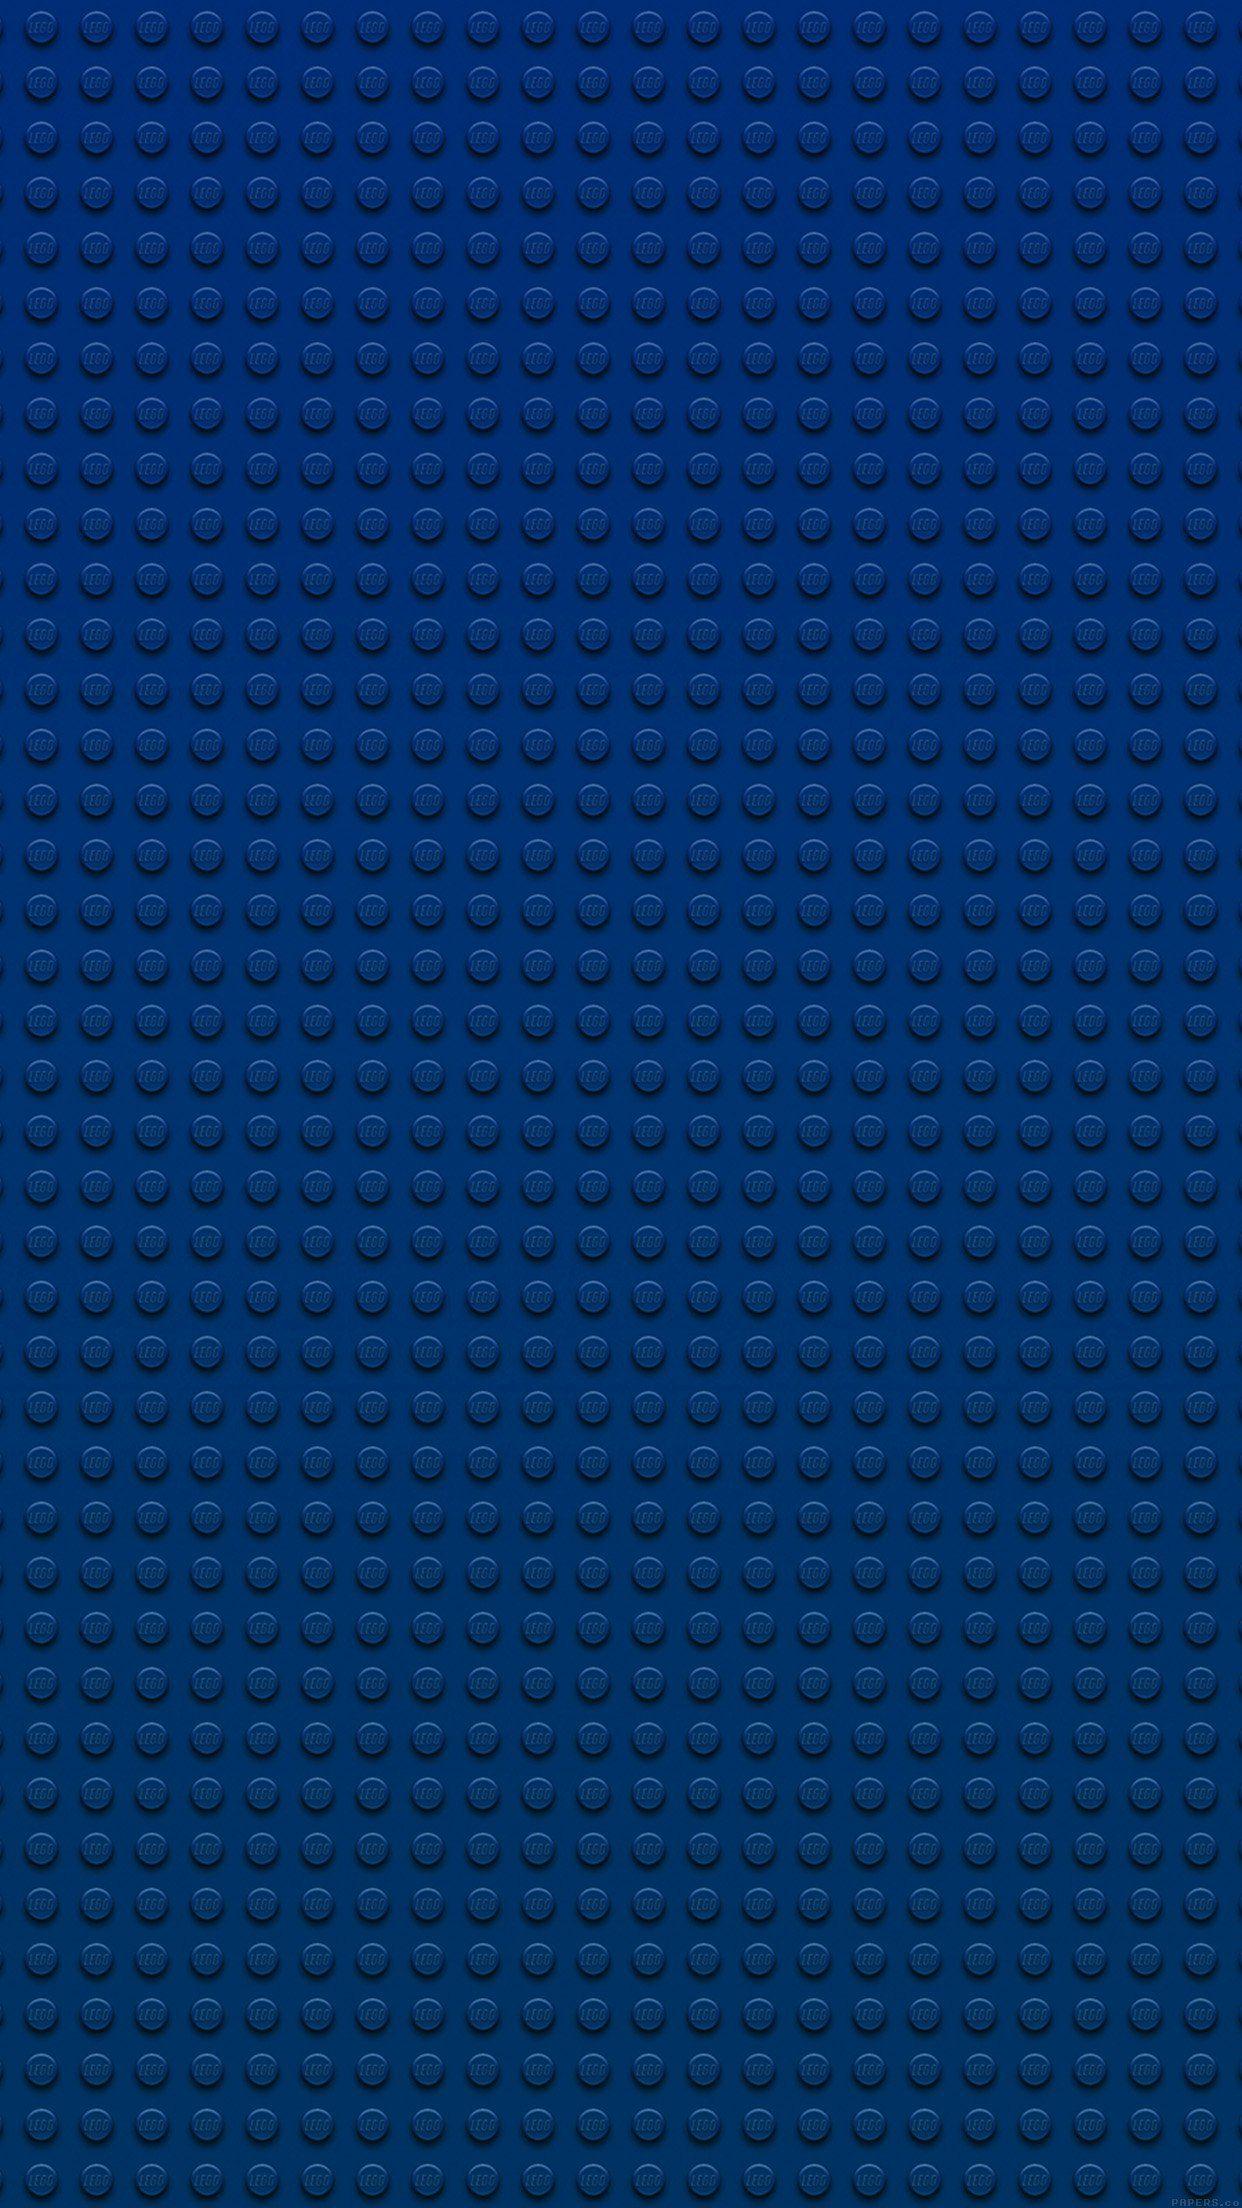 LEGO iPhone Wallpaper Free LEGO iPhone Background